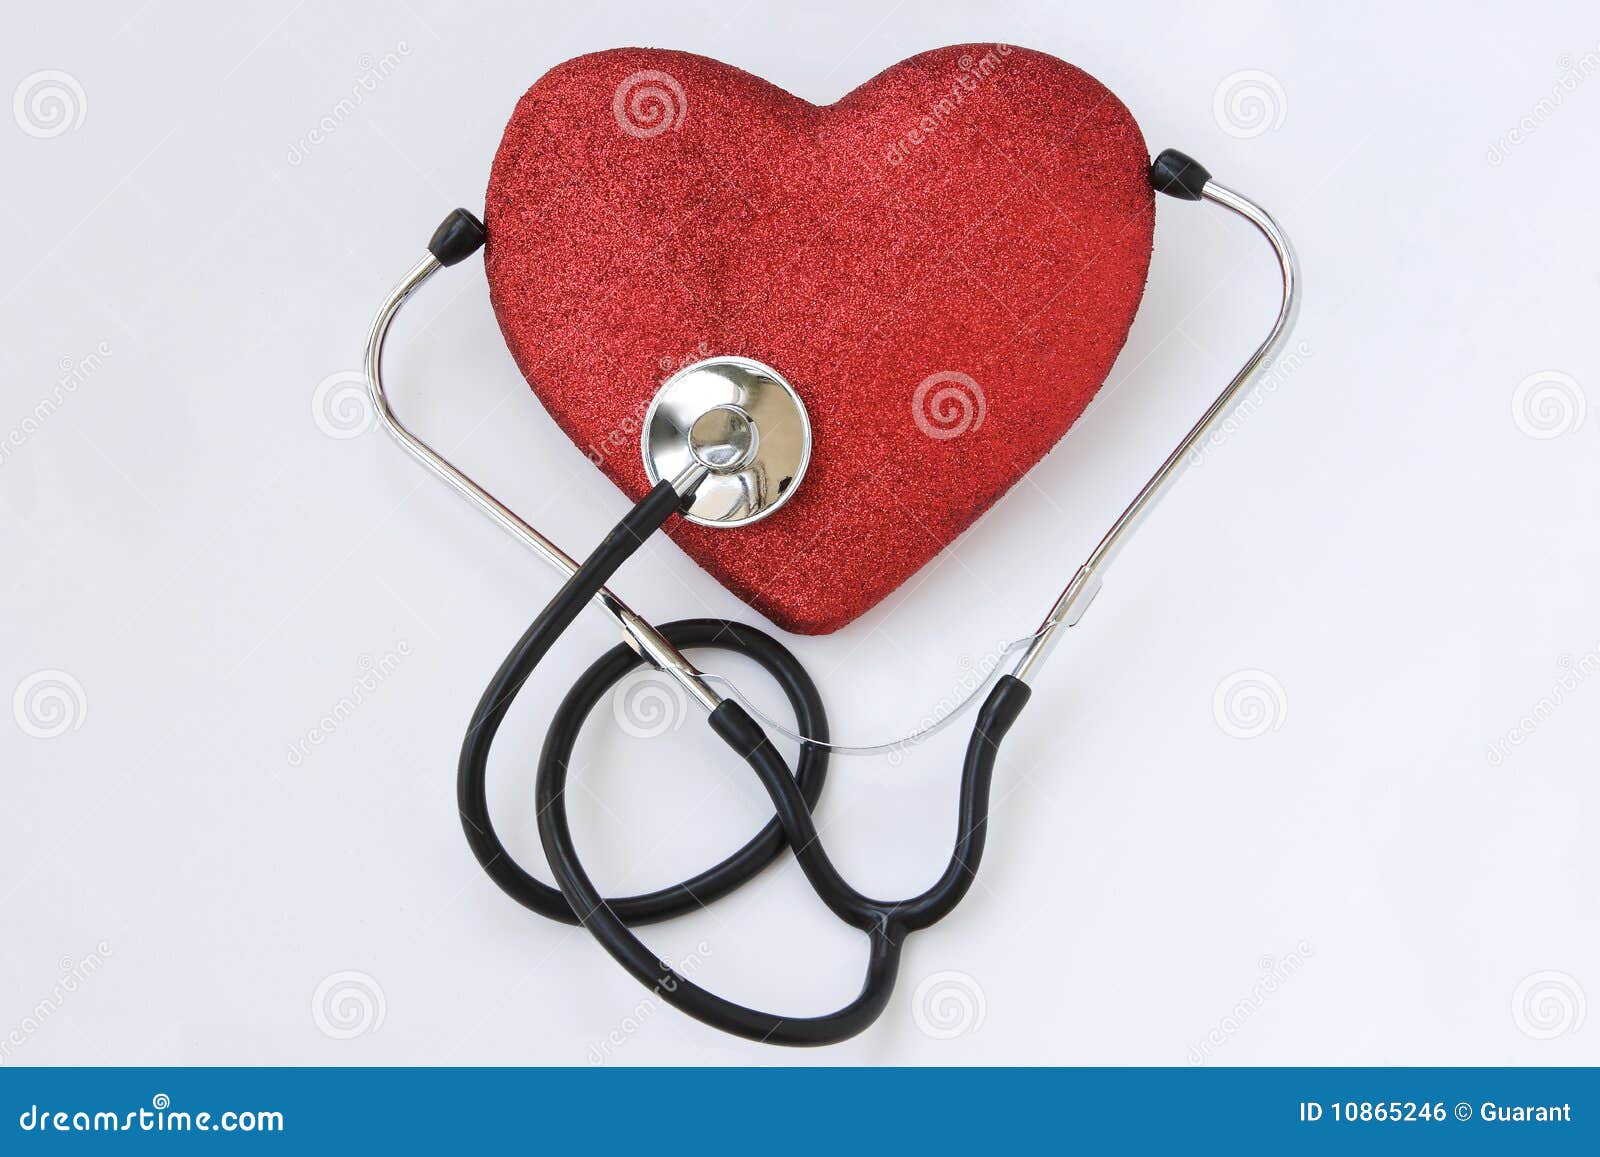 heart blood pressure care